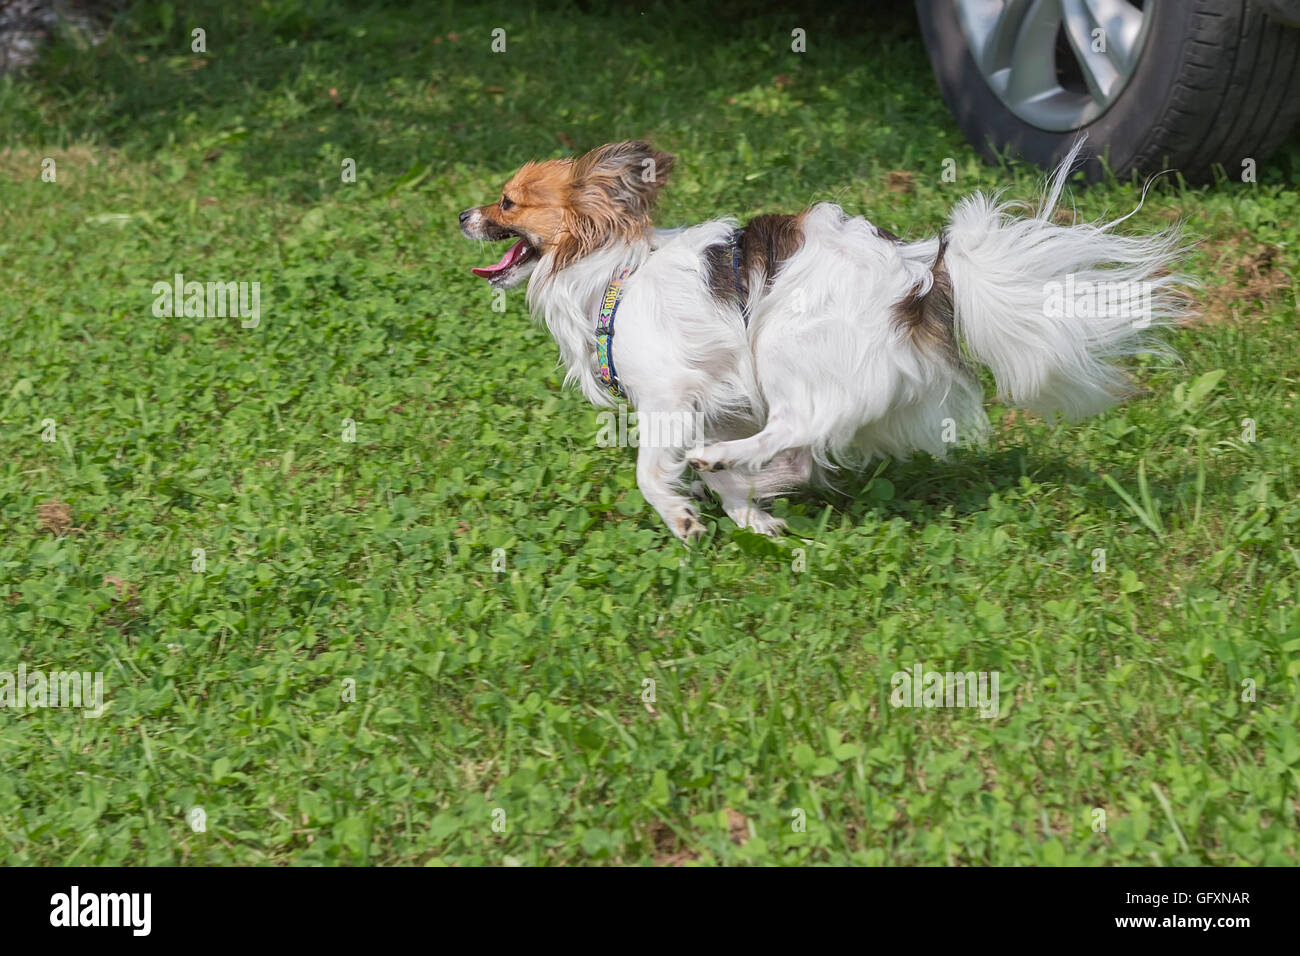 Papillon dog (Canis lupus familiaris) quickly runs Stock Photo